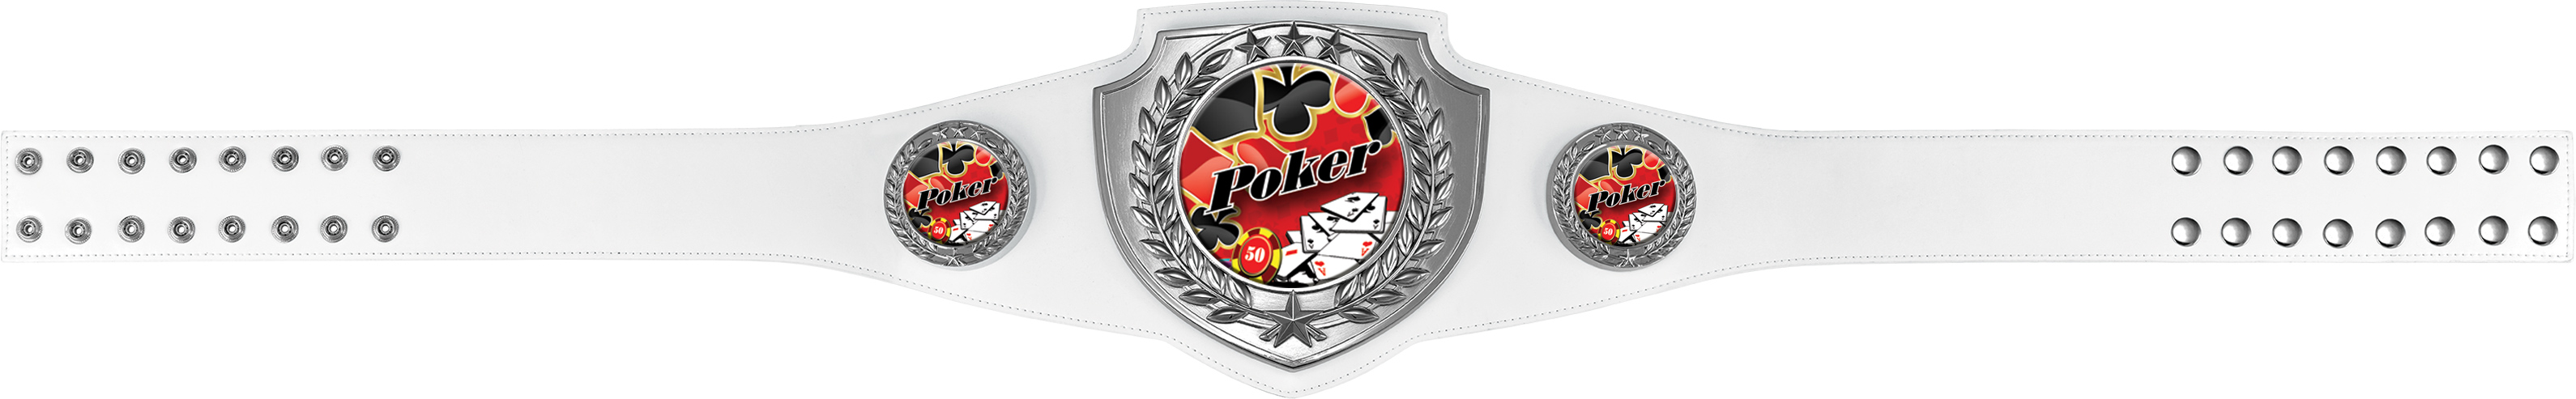 Poker Champion Shield Award Belt